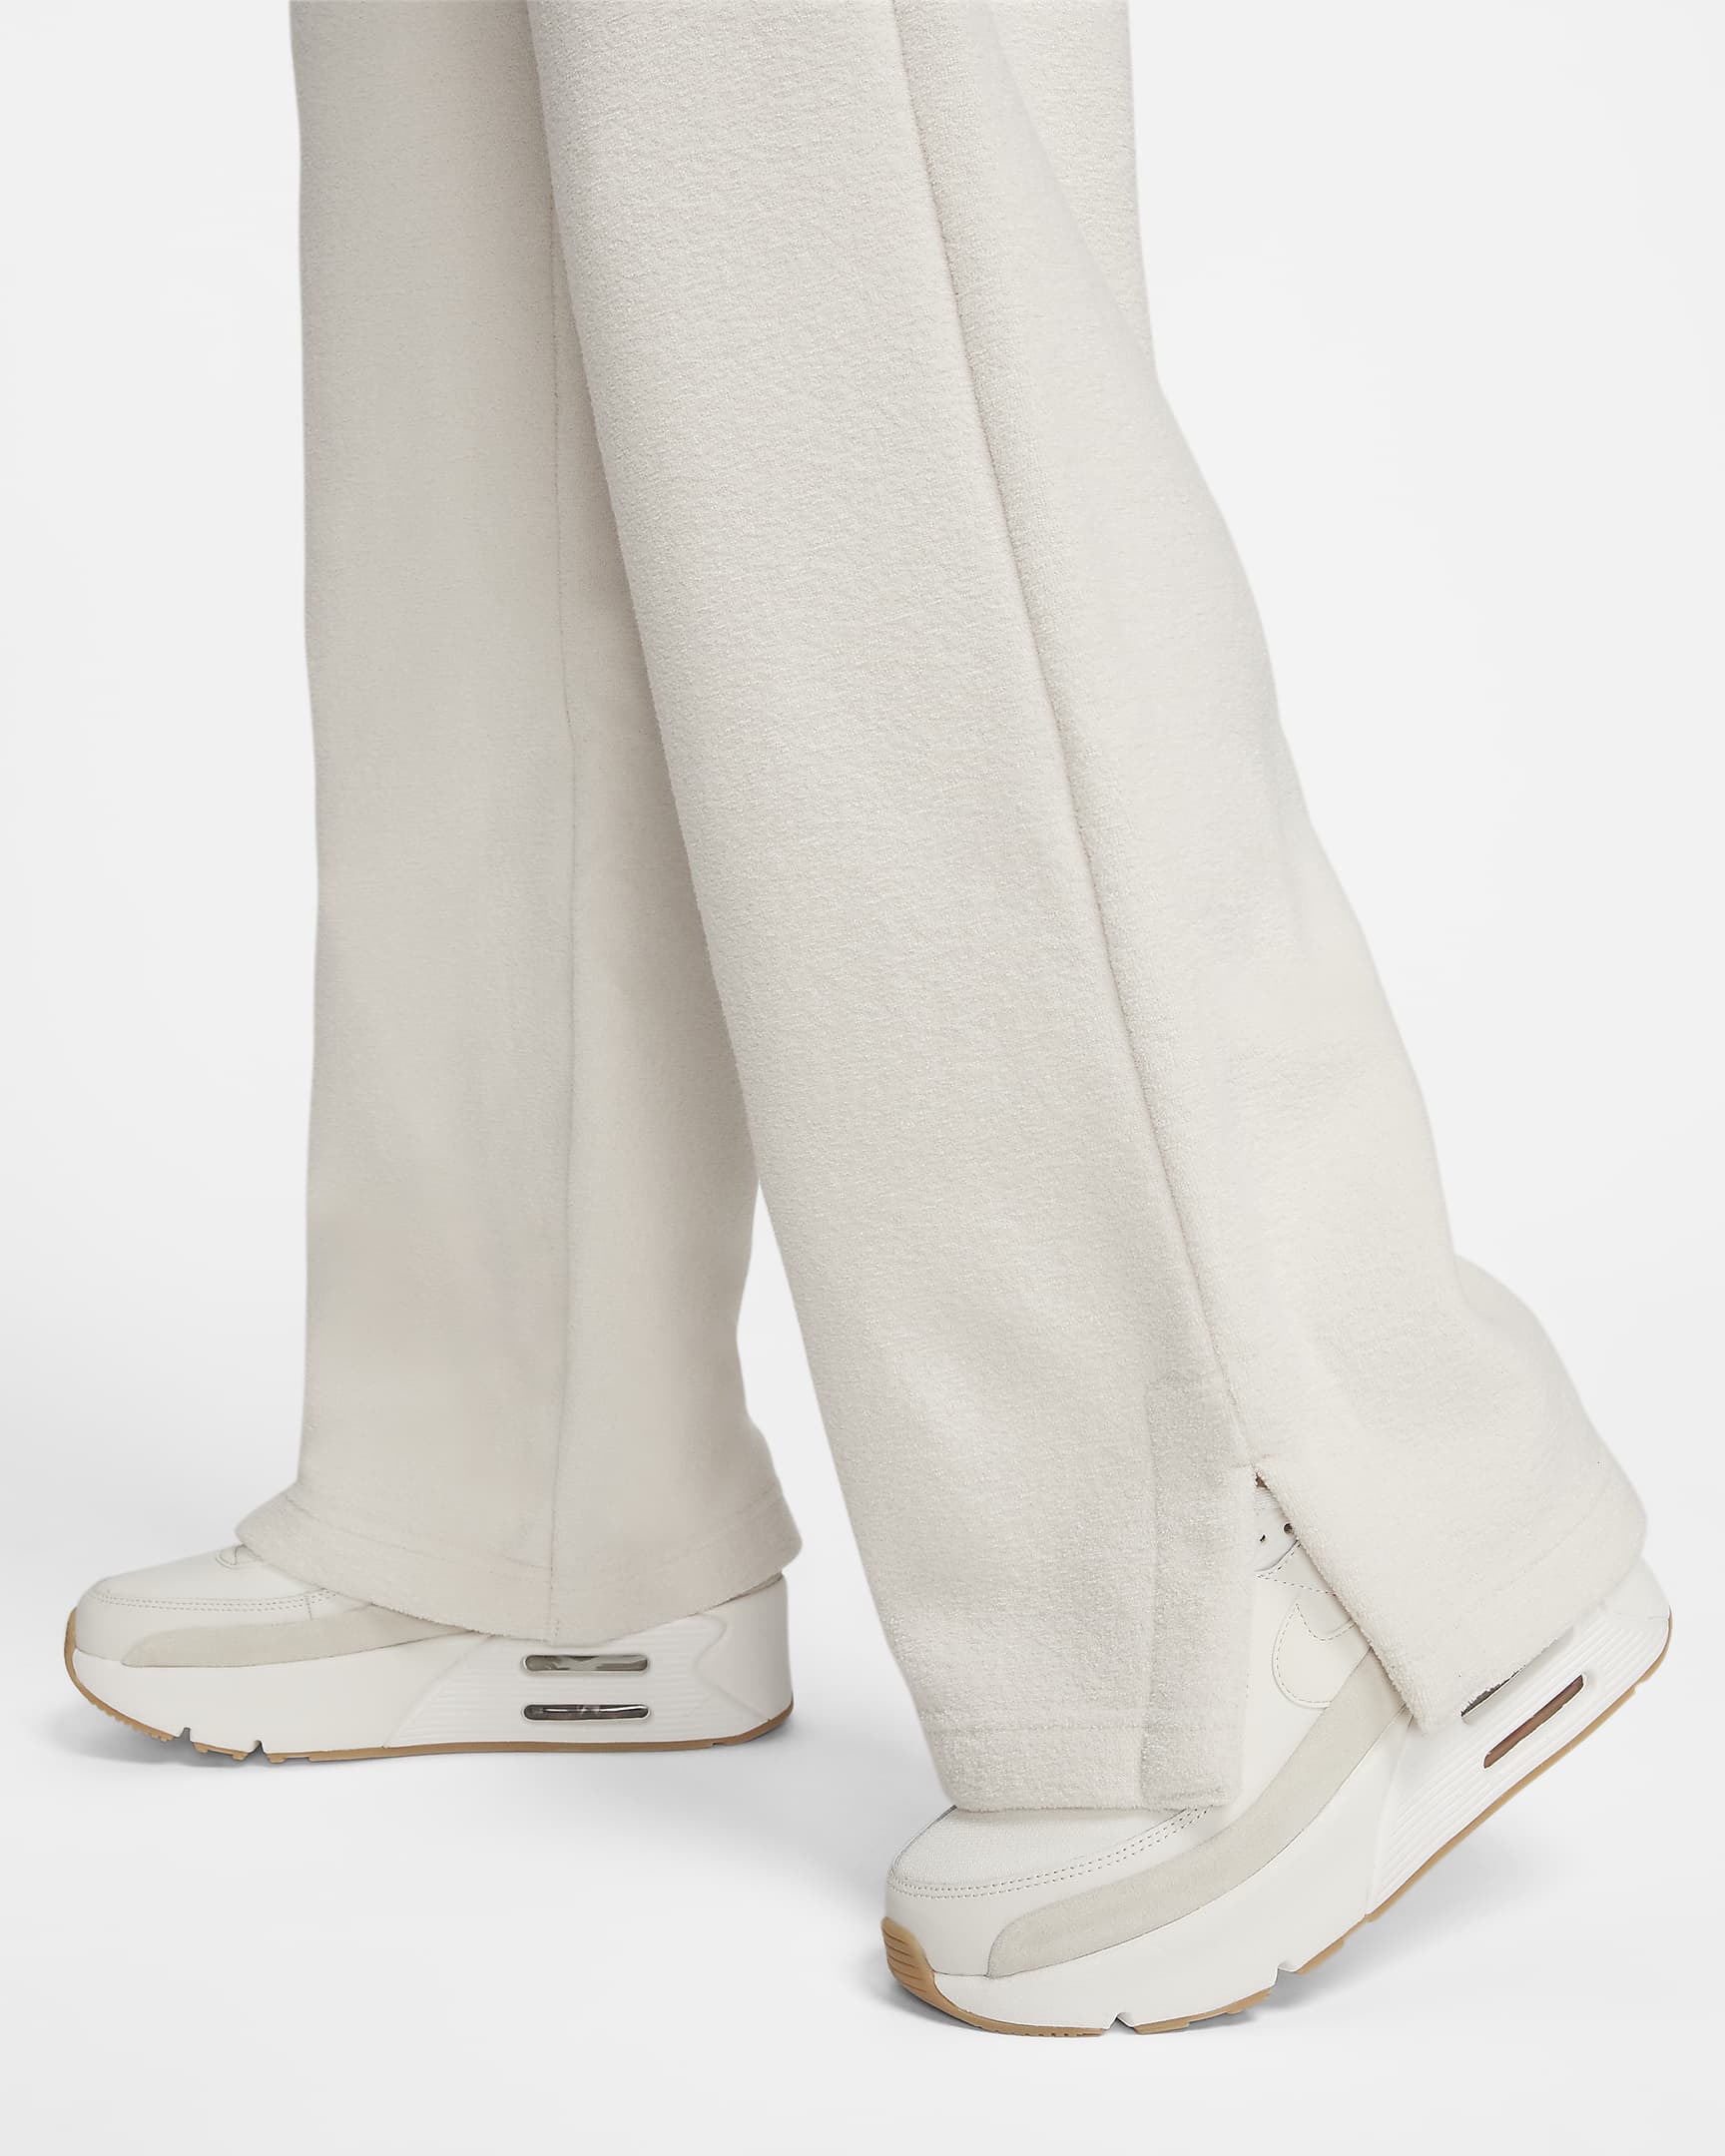 Pantaloni confortevoli in fleece a gamba larga e vita alta Nike Sportswear Phoenix Plush – Donna - Light Orewood Brown/Sail